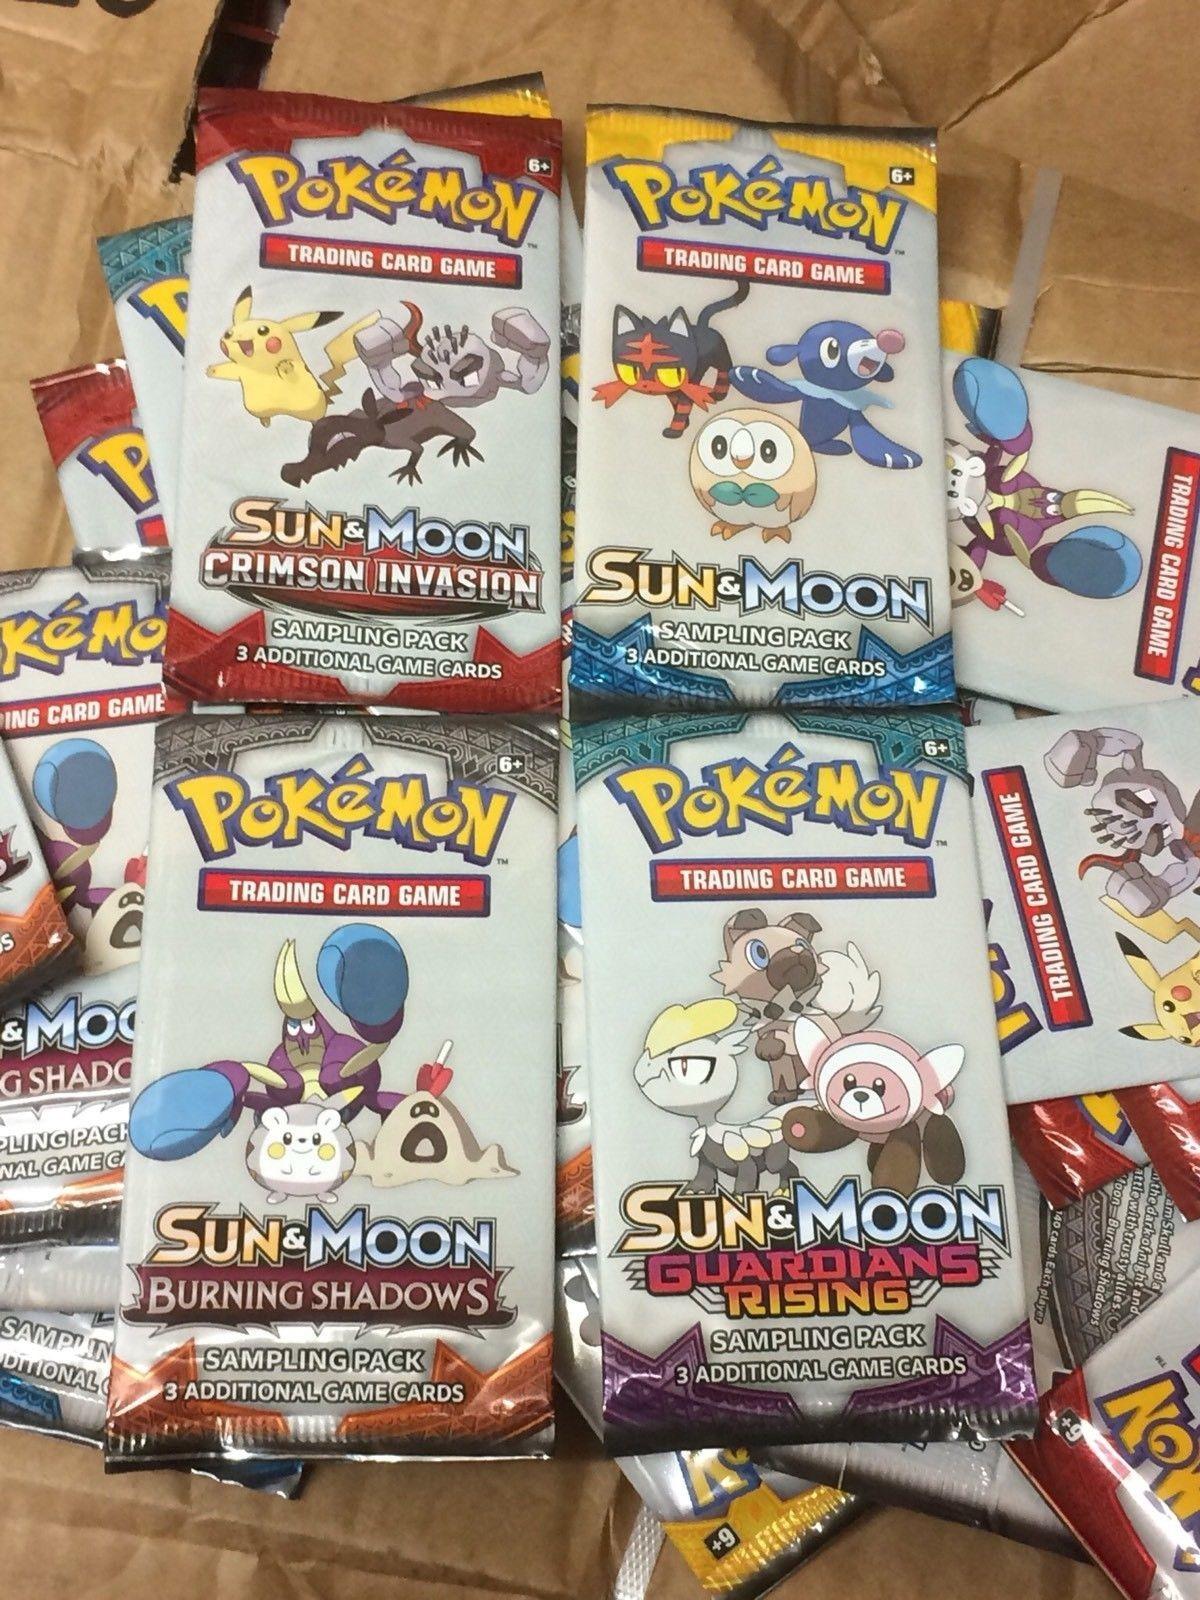 3 Cards Brand New Sealed Pokemon Sun and Moon Burning Shadows Sampling Pack 